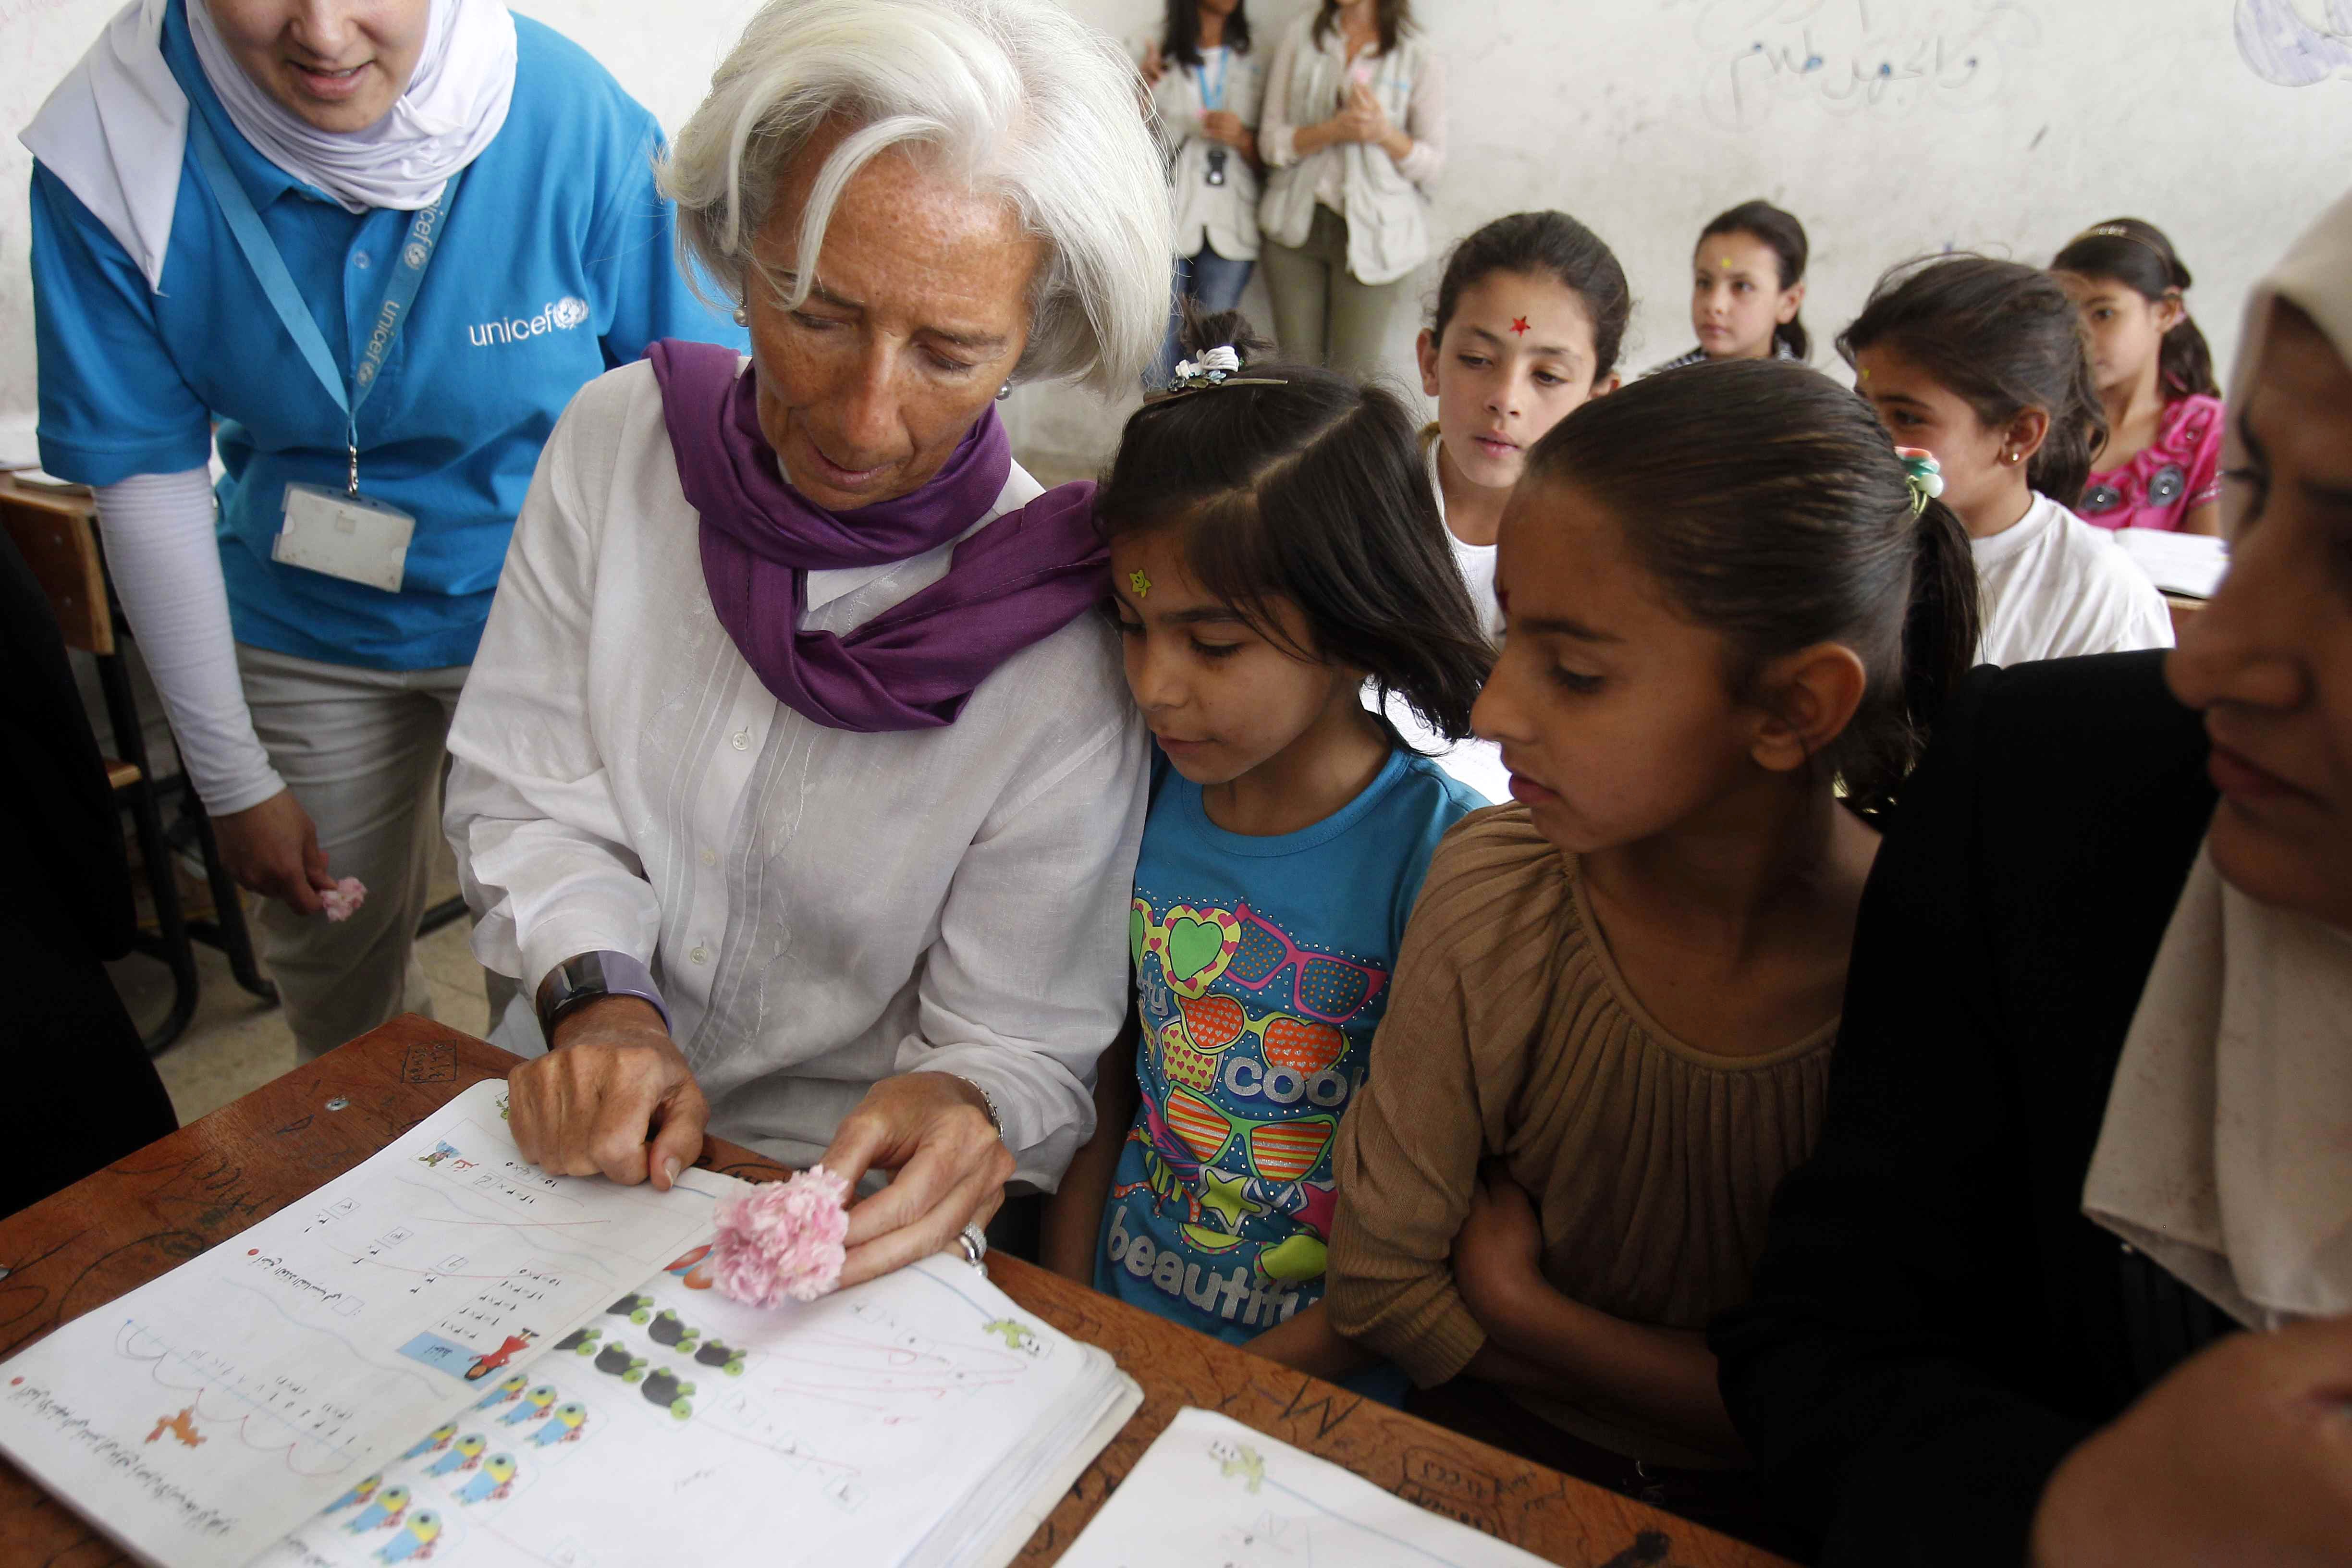 International Monetary Fund Managing Director Christine Lagarde speaking with students from the Alimate school in Mafraq, Jordan. Photo: EPA/Ali Jarekji/Pool